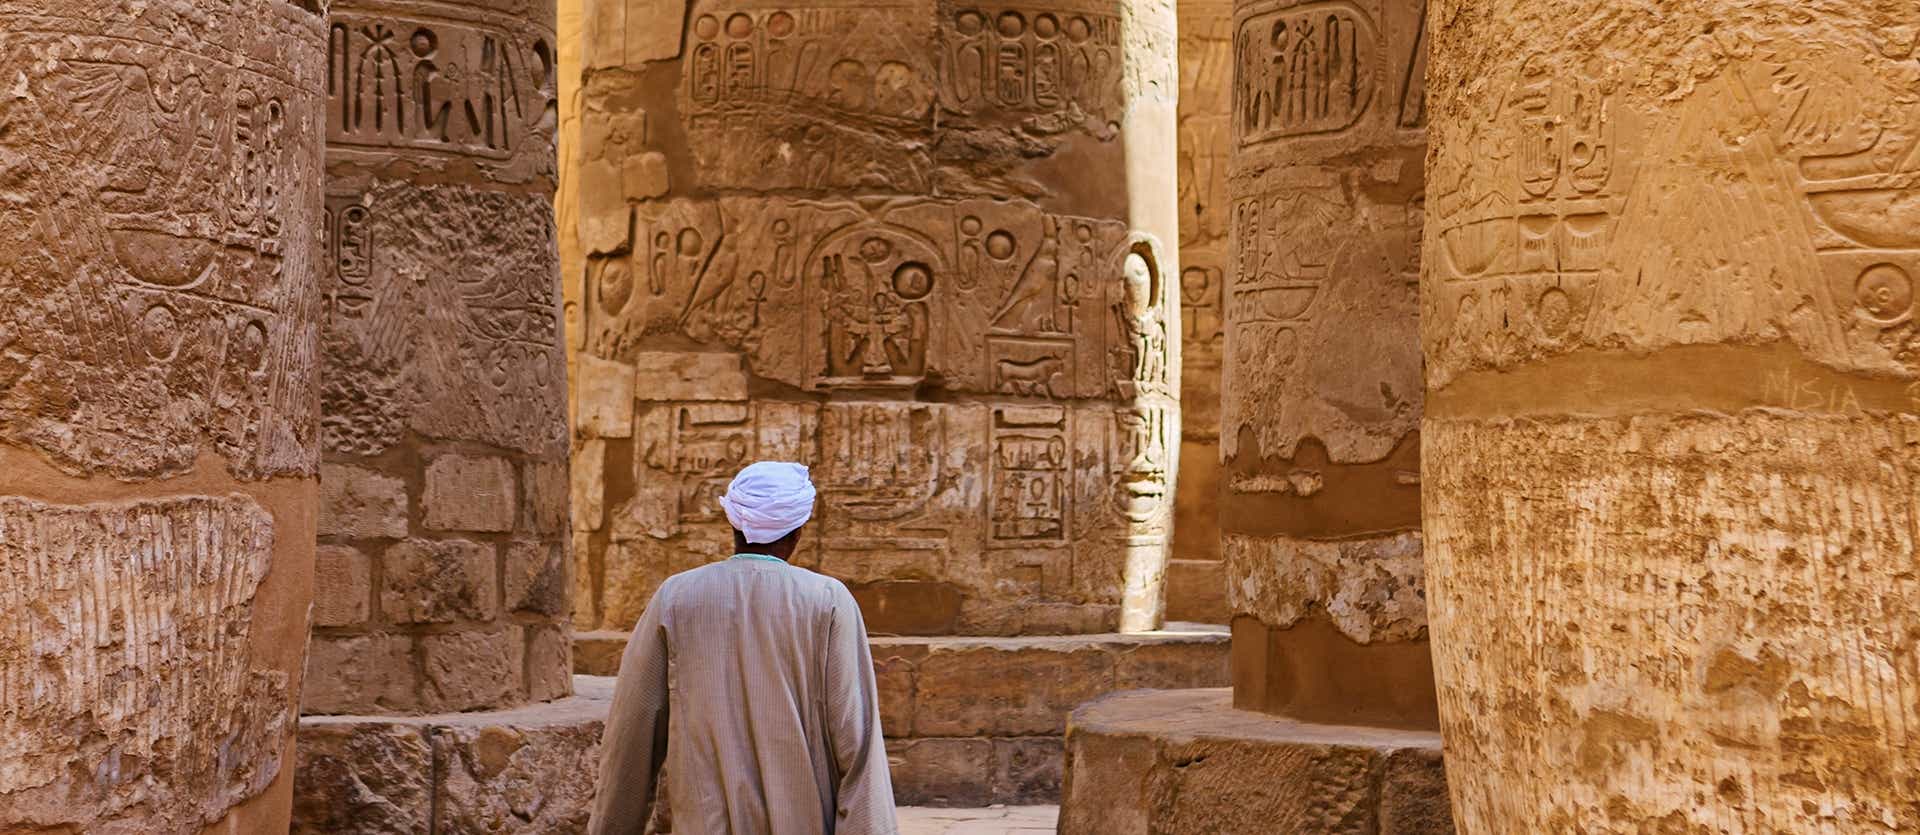 Karnak Temple Complex <span class="iconos separador"></span> Luxor <span class="iconos separador"></span> Egypt 